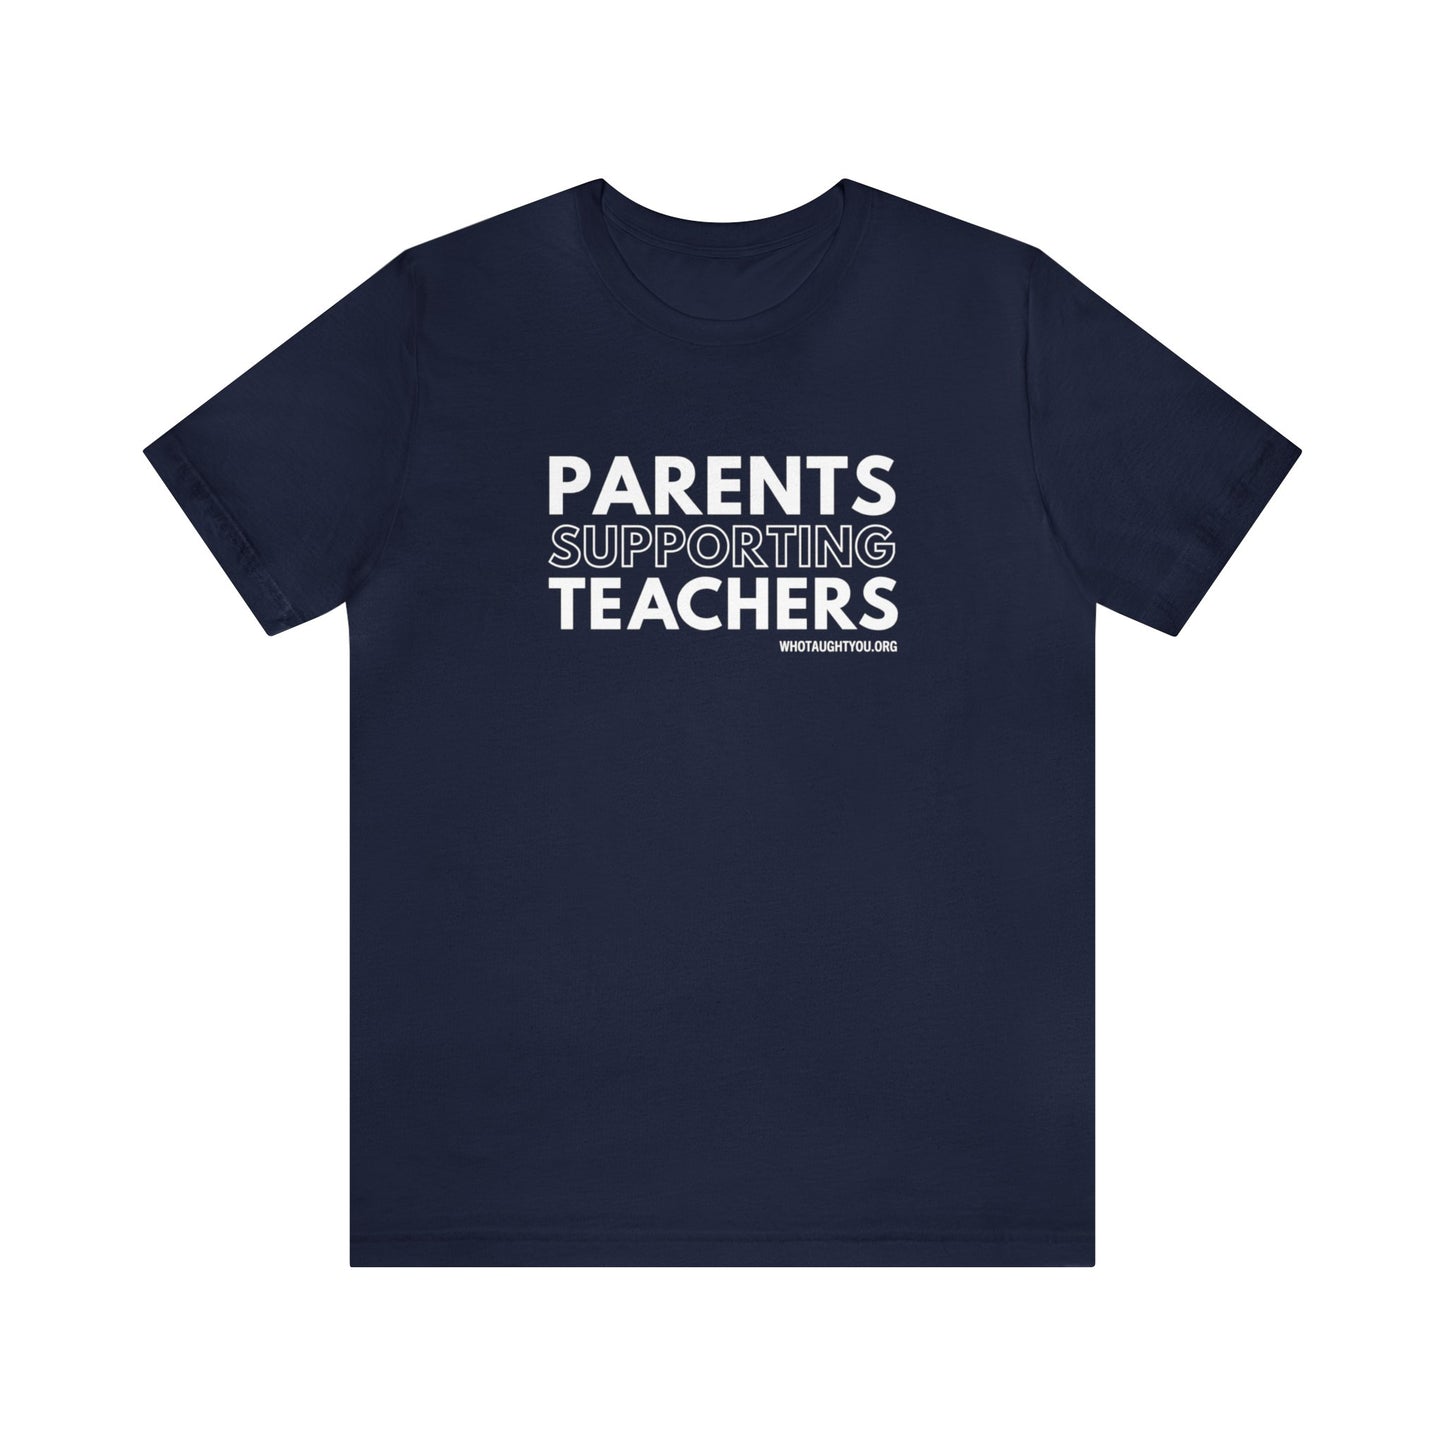 PARENTS SUPPORTING TEACHERS Tri-blend T-shirt